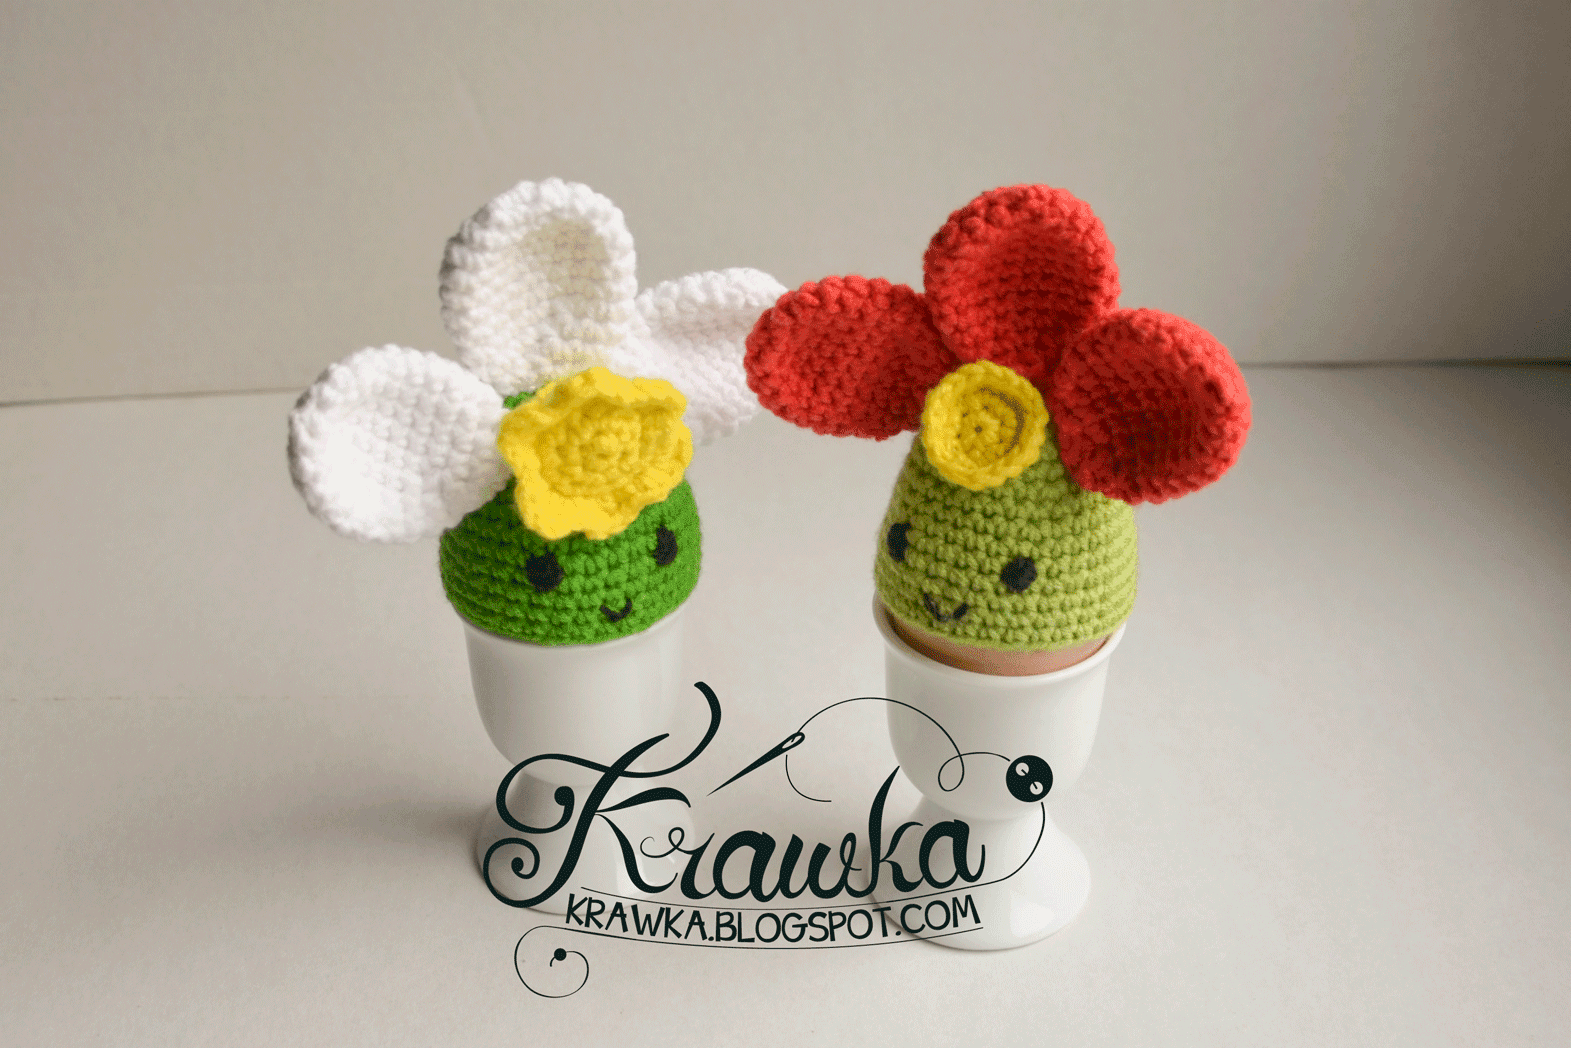 Krawka: Spring flower - Easter egg cozies - Free crochet Pattern to make it yourself